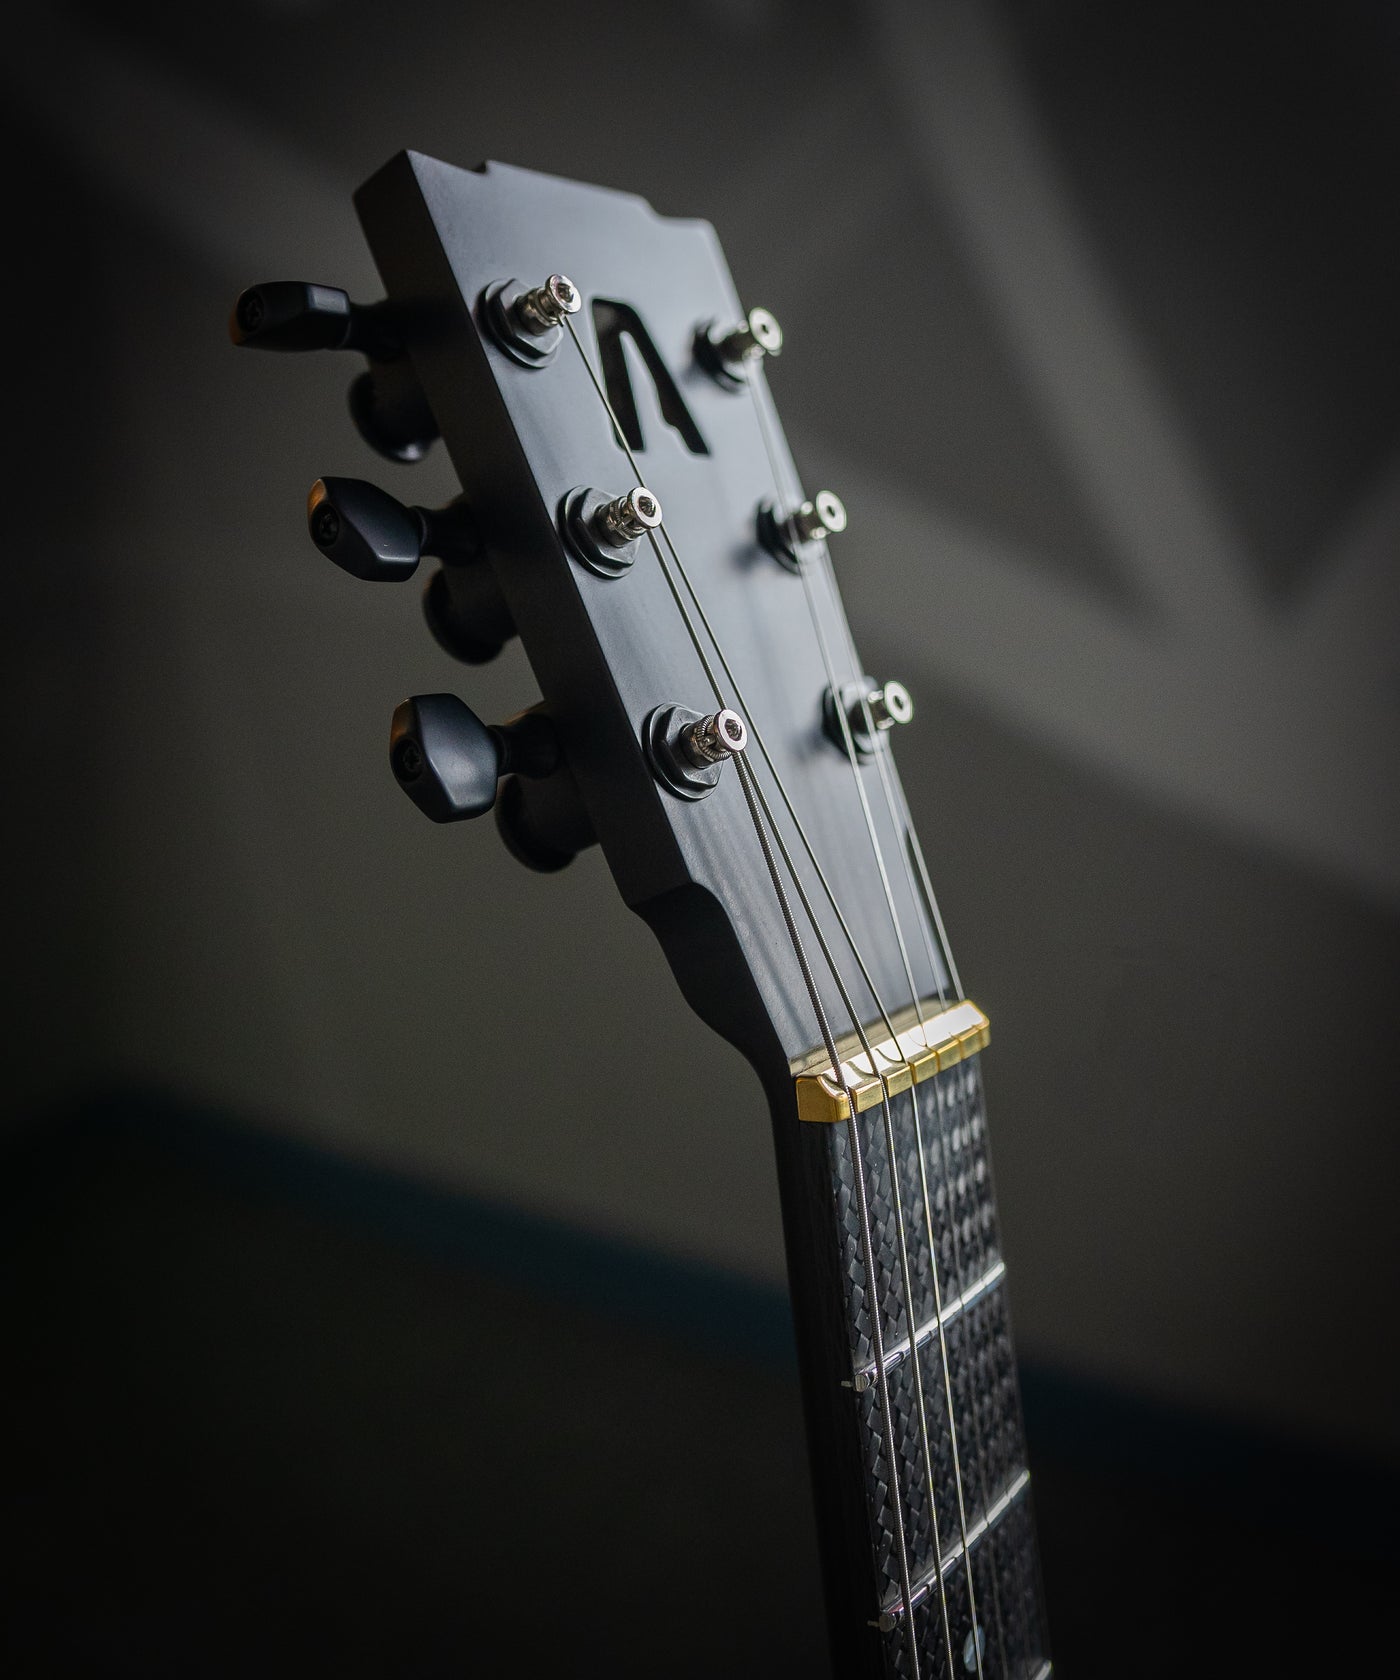 Orion Eclipse Guitar